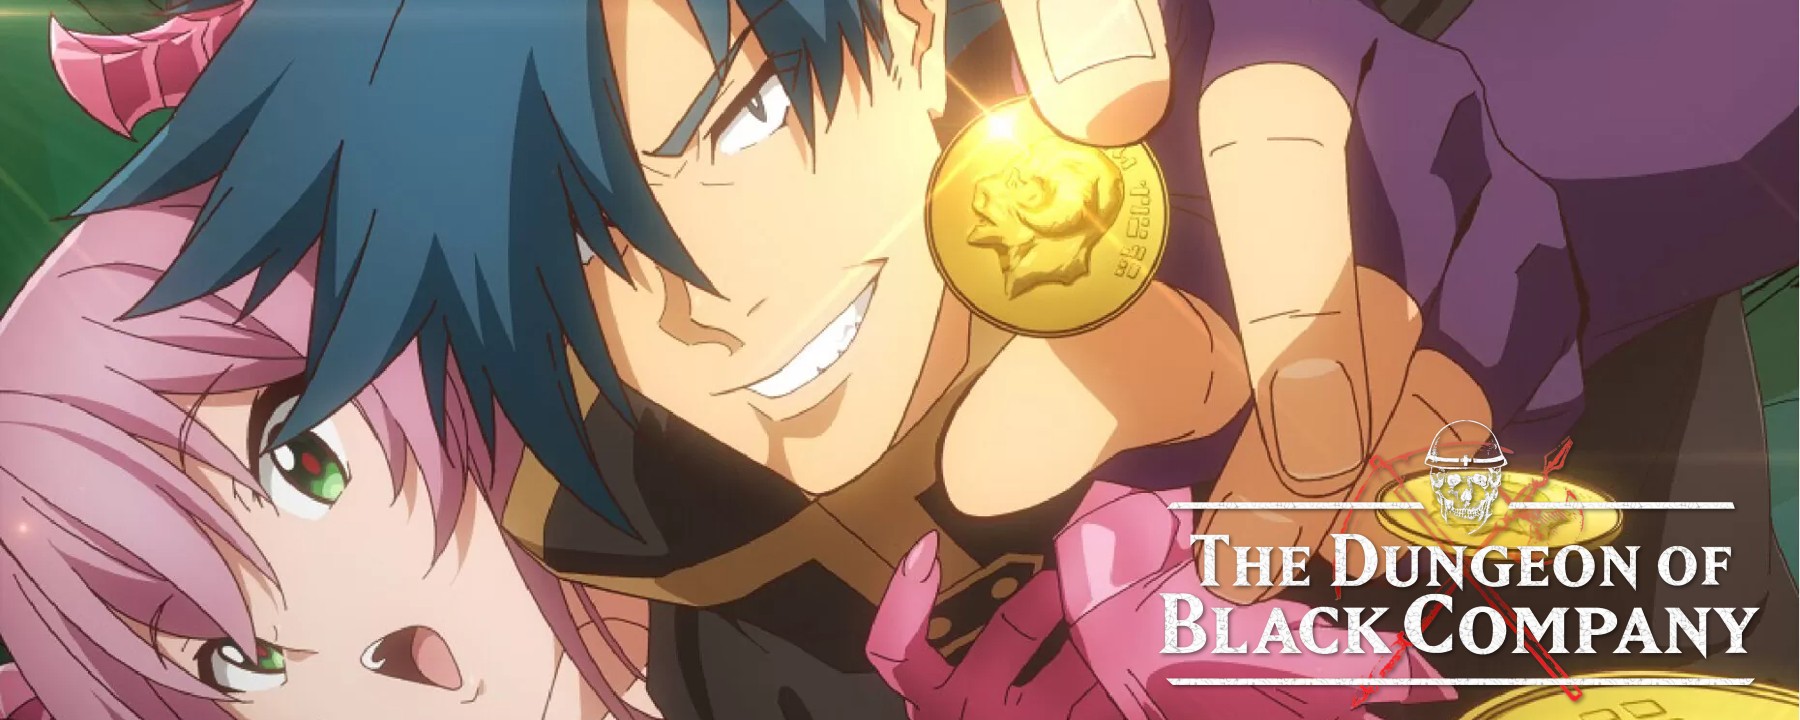 Anime Hajime Review: The Dungeon of Black Company - Anime Hajime